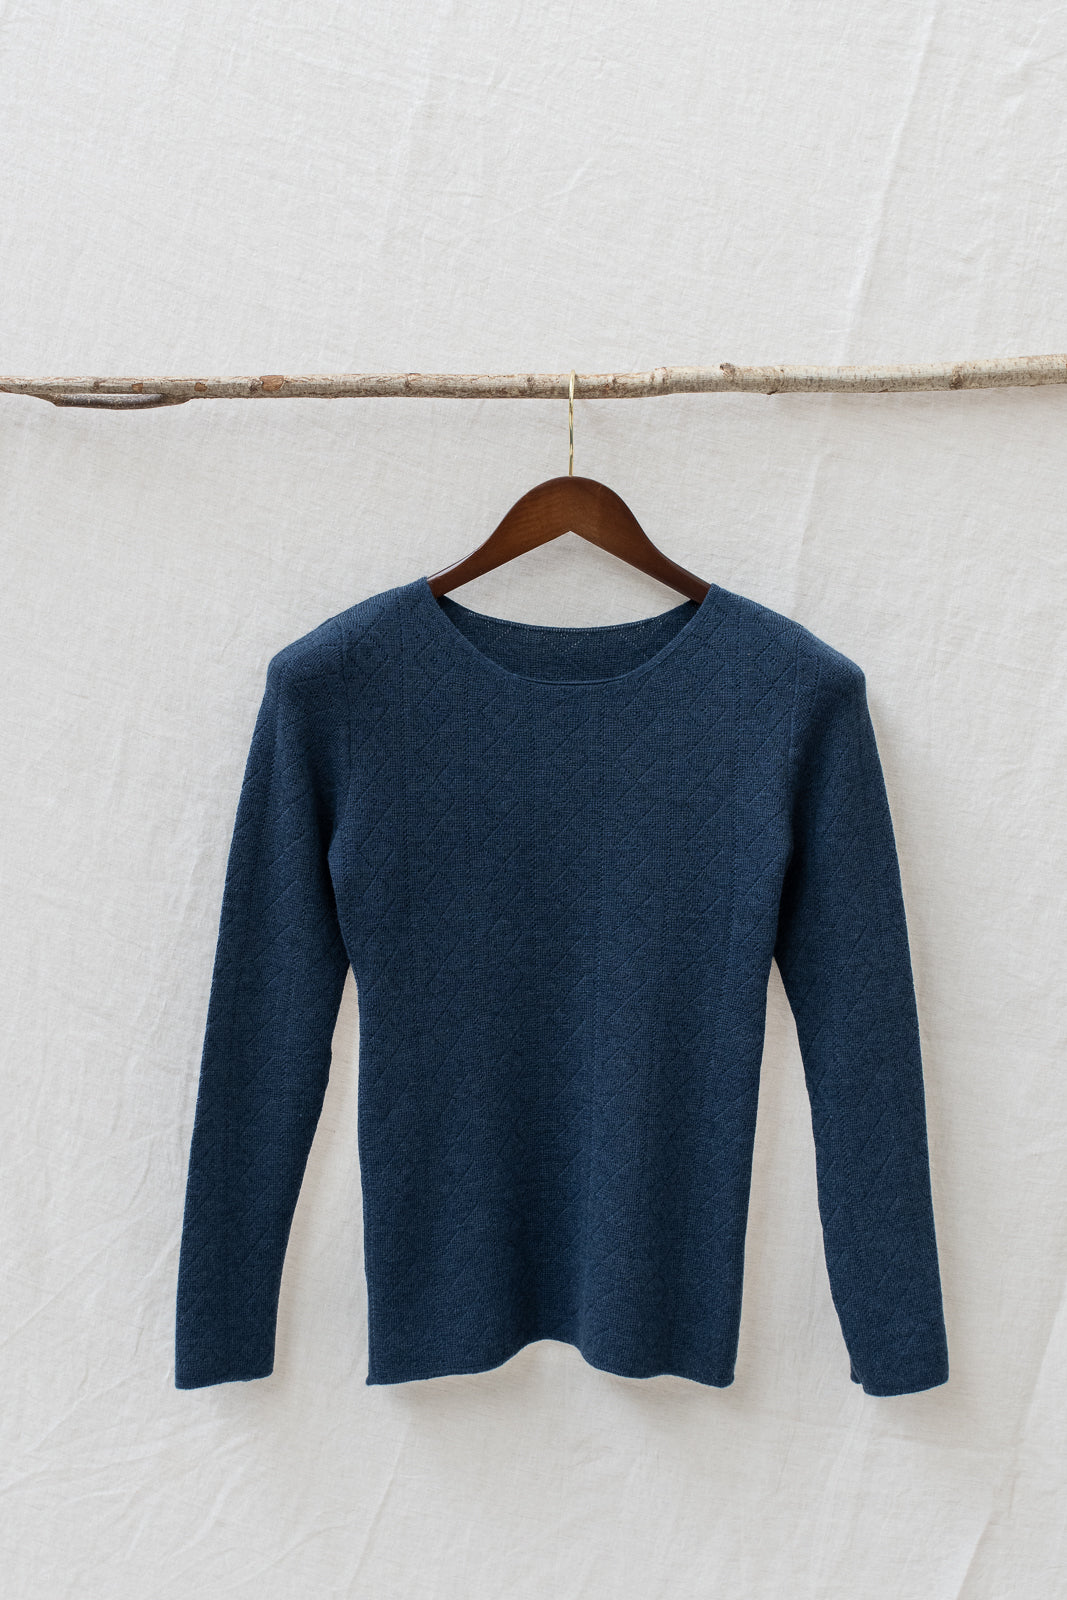 'Tricot de Peau' Fine Merino Wool Base Layer in Indigo Blue